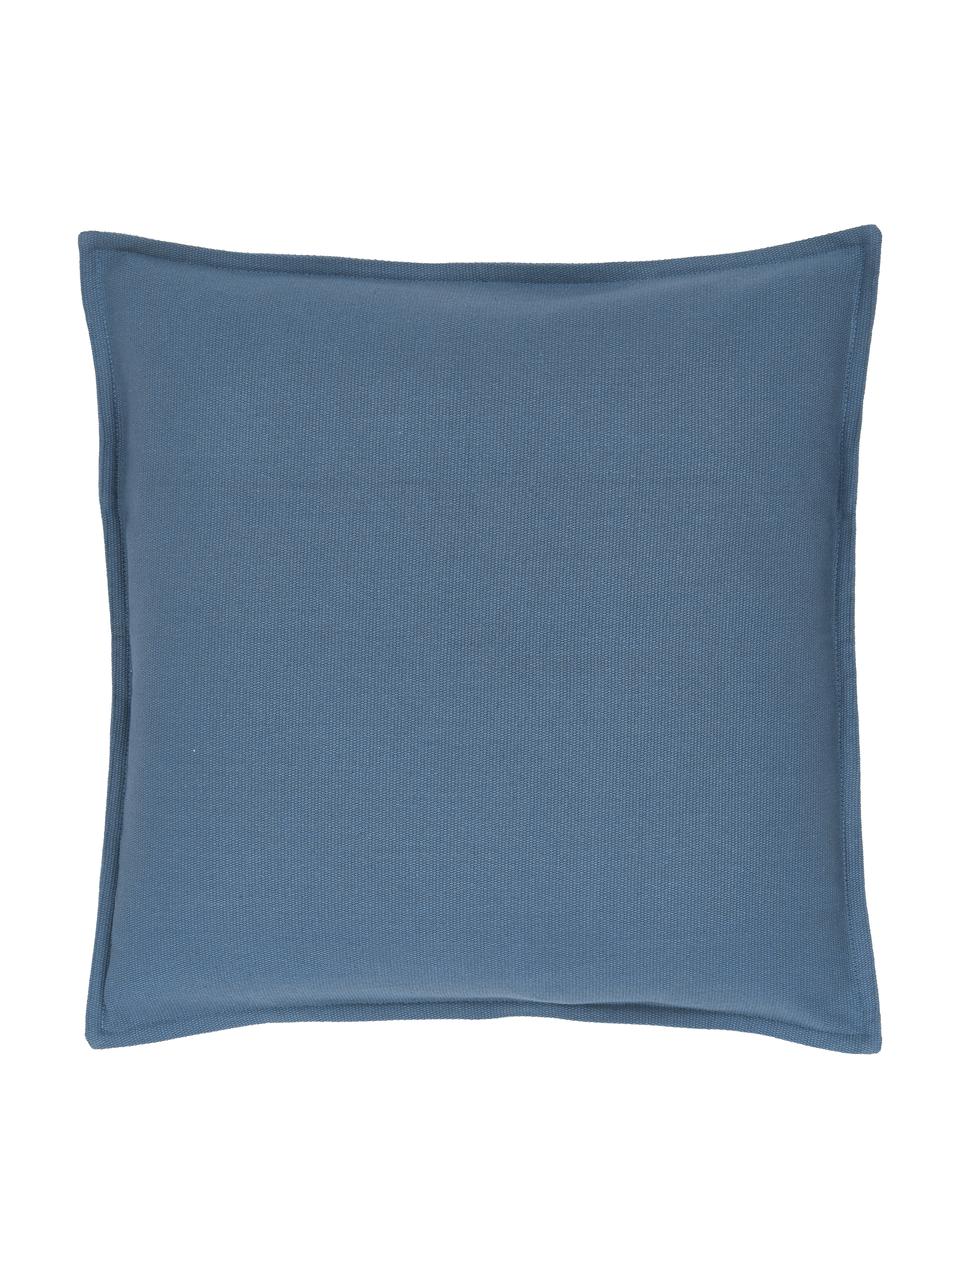 Baumwoll-Kissenhülle Mads in Blau, 100% Baumwolle, Blau, 40 x 40 cm